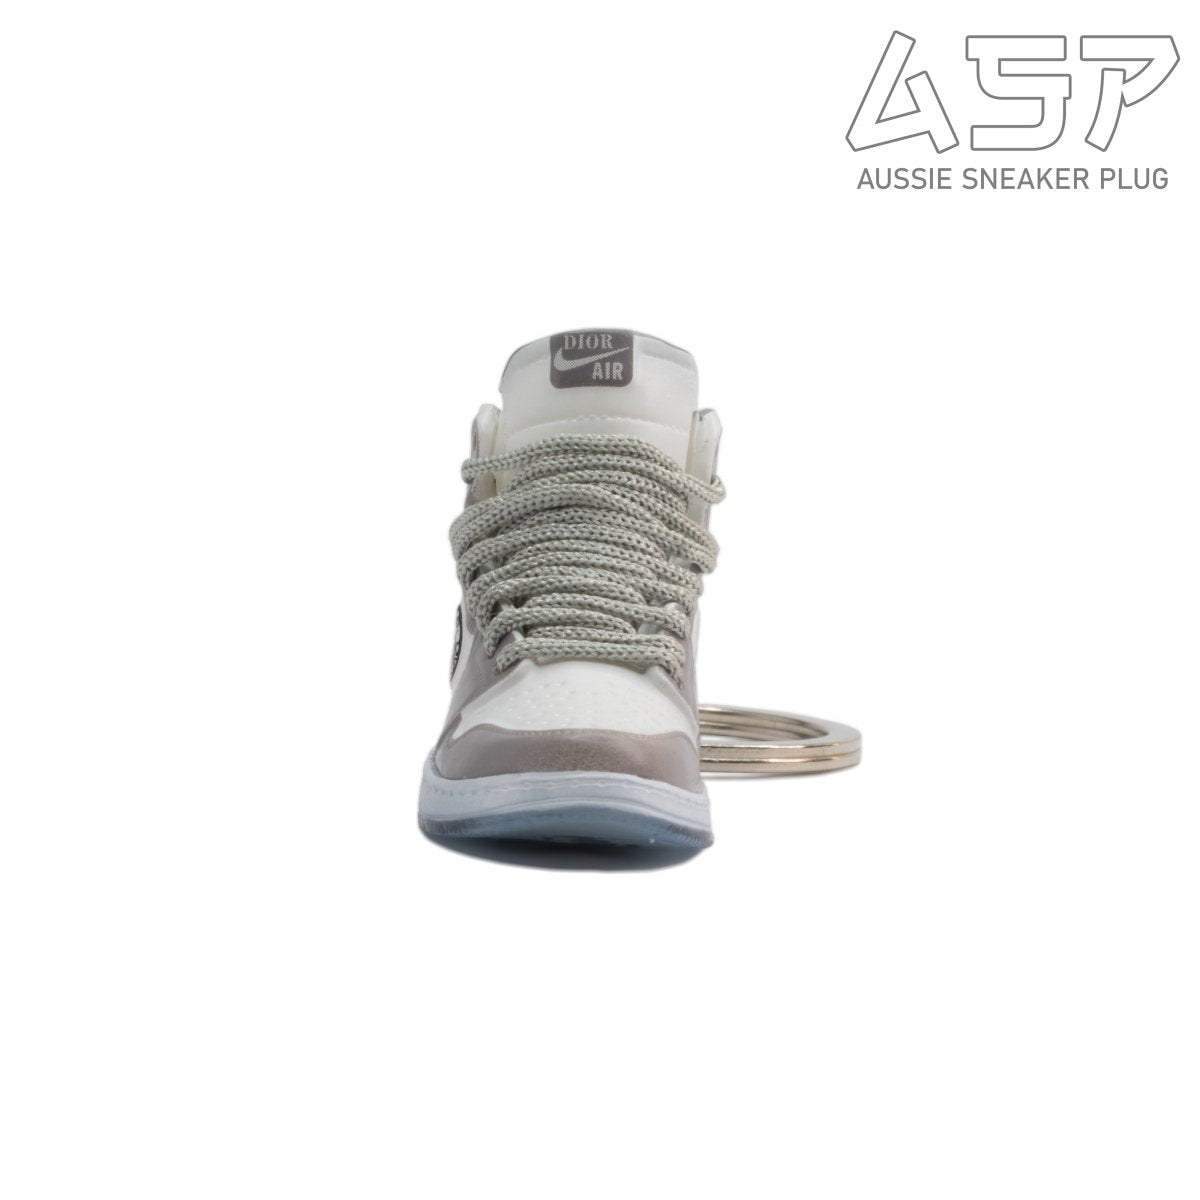 AJ1 Dior Mini Sneaker Keychain - Aussie Sneaker Plug